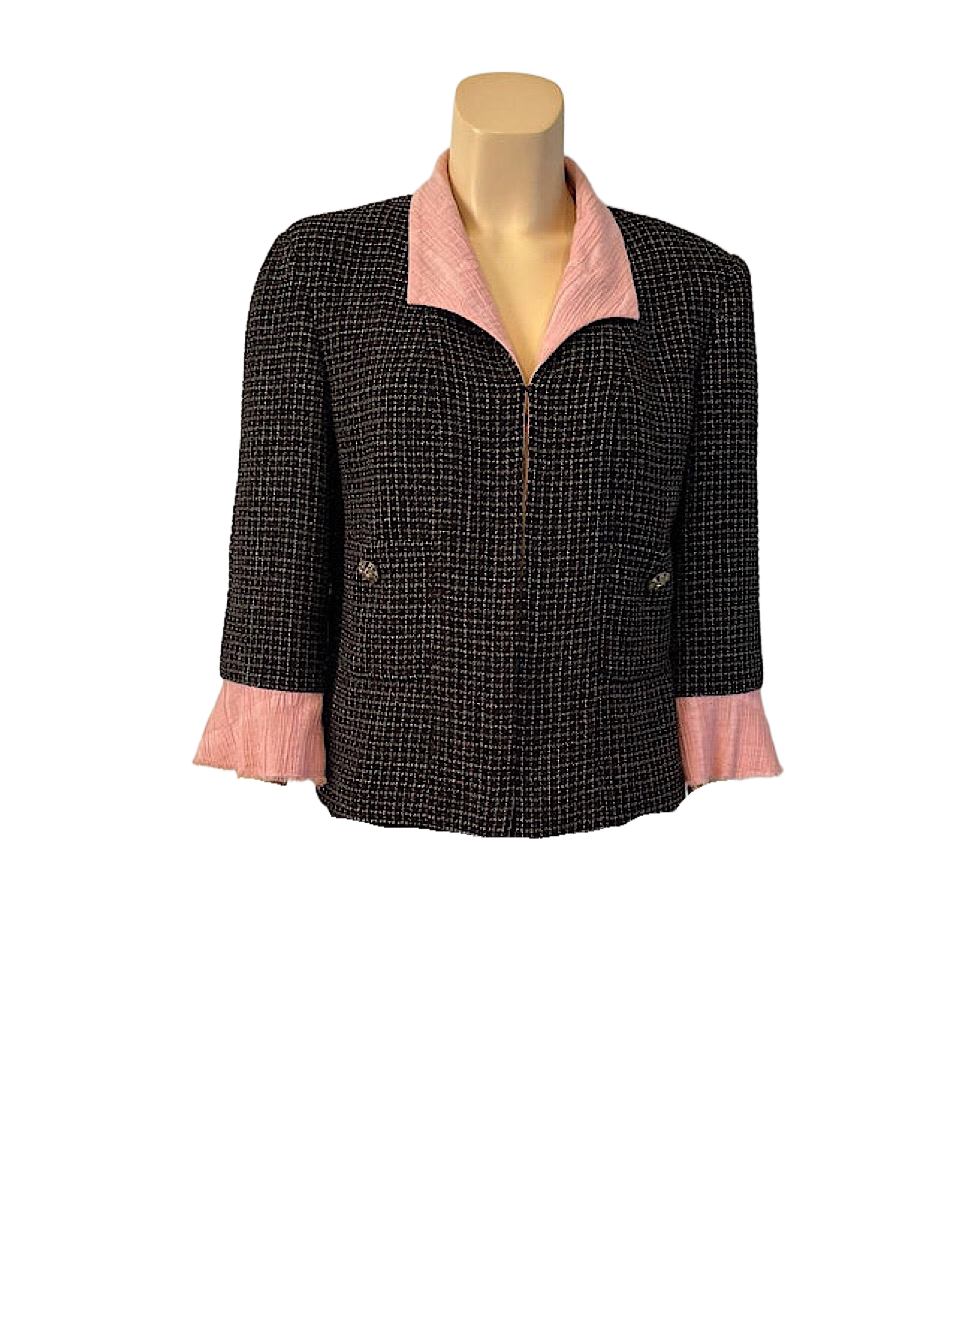 Used chanel tweed jacket - Gem